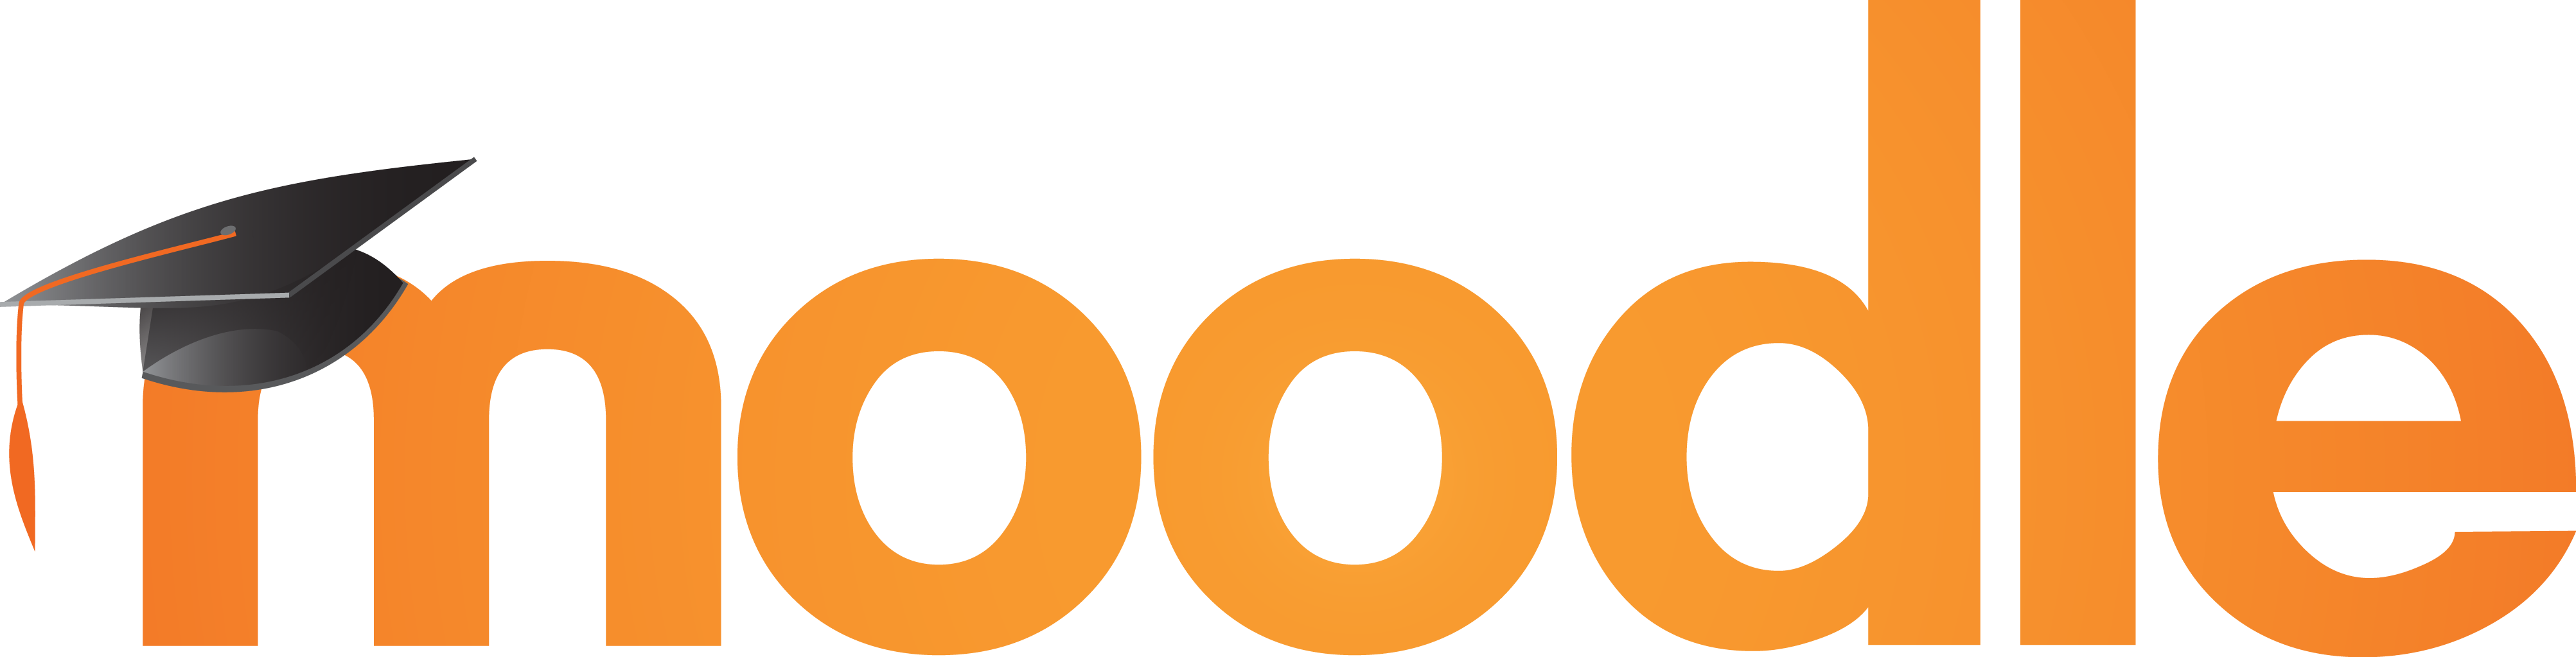 Moodle logo - source: https://moodle.org/logo/